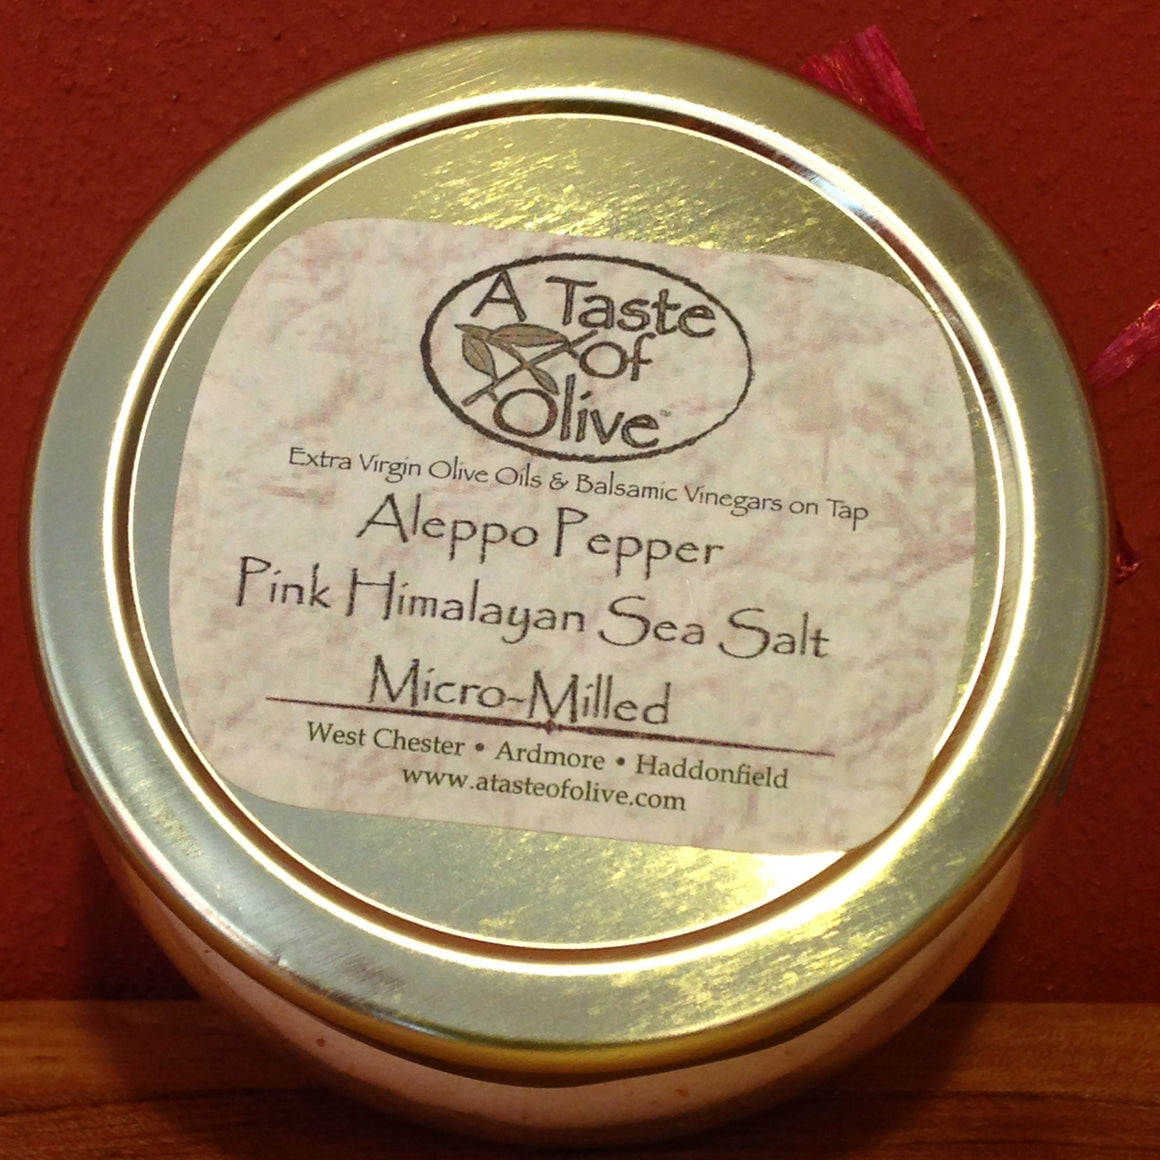 Aleppo Pepper Pink Himalayan Sea Salt - A Taste of Olive